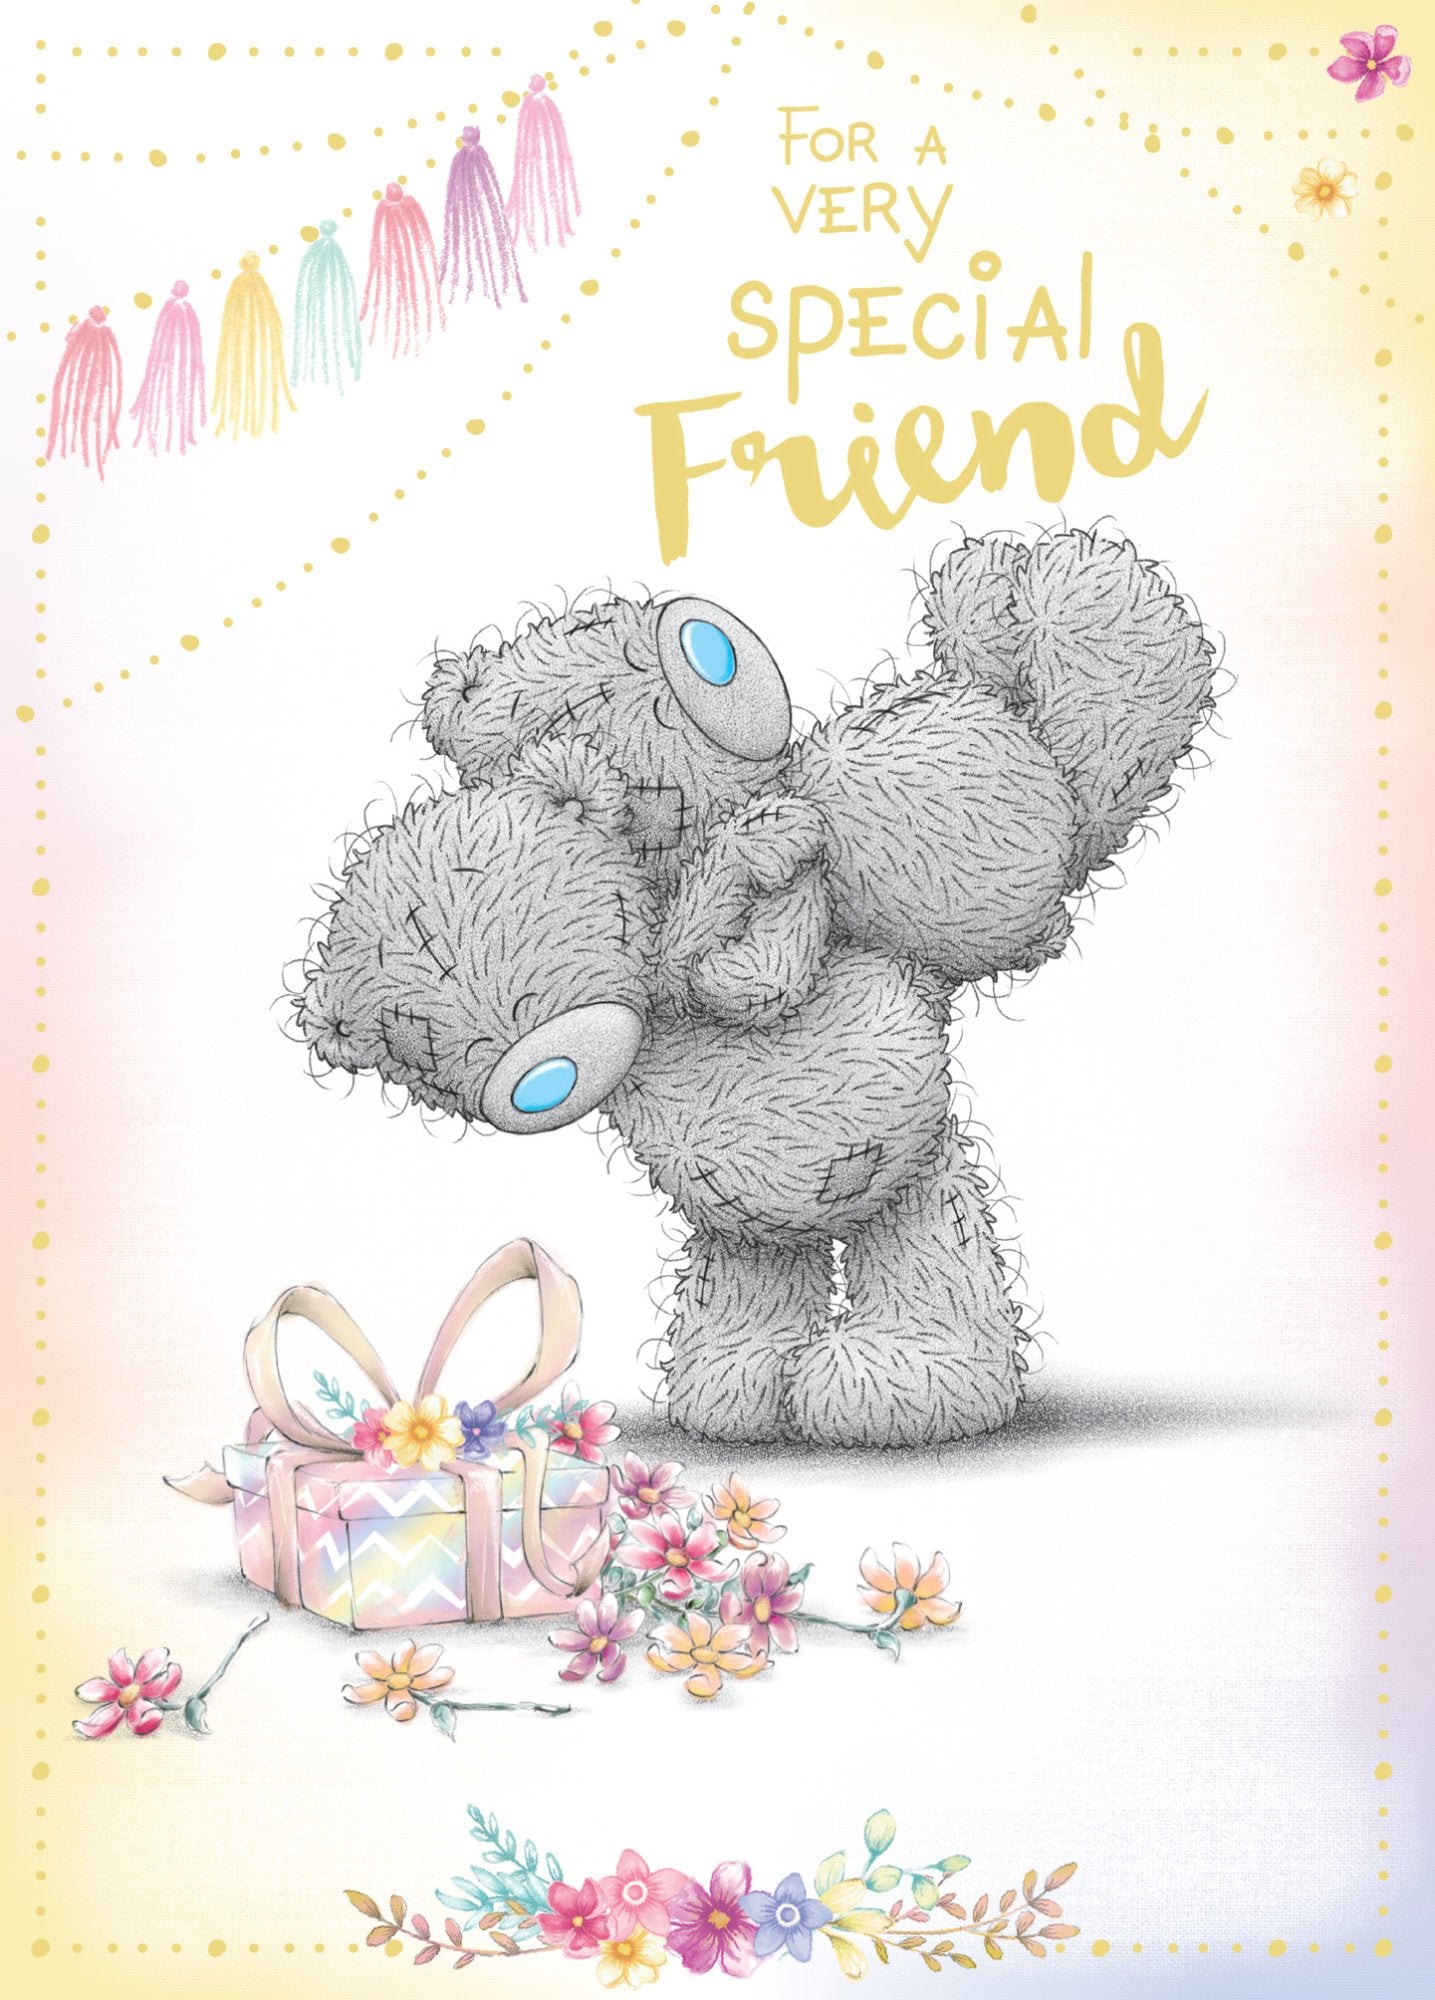 Photograph of Friend Bday Bears Balancing Birthday Greetings Card at Nicole's Shop